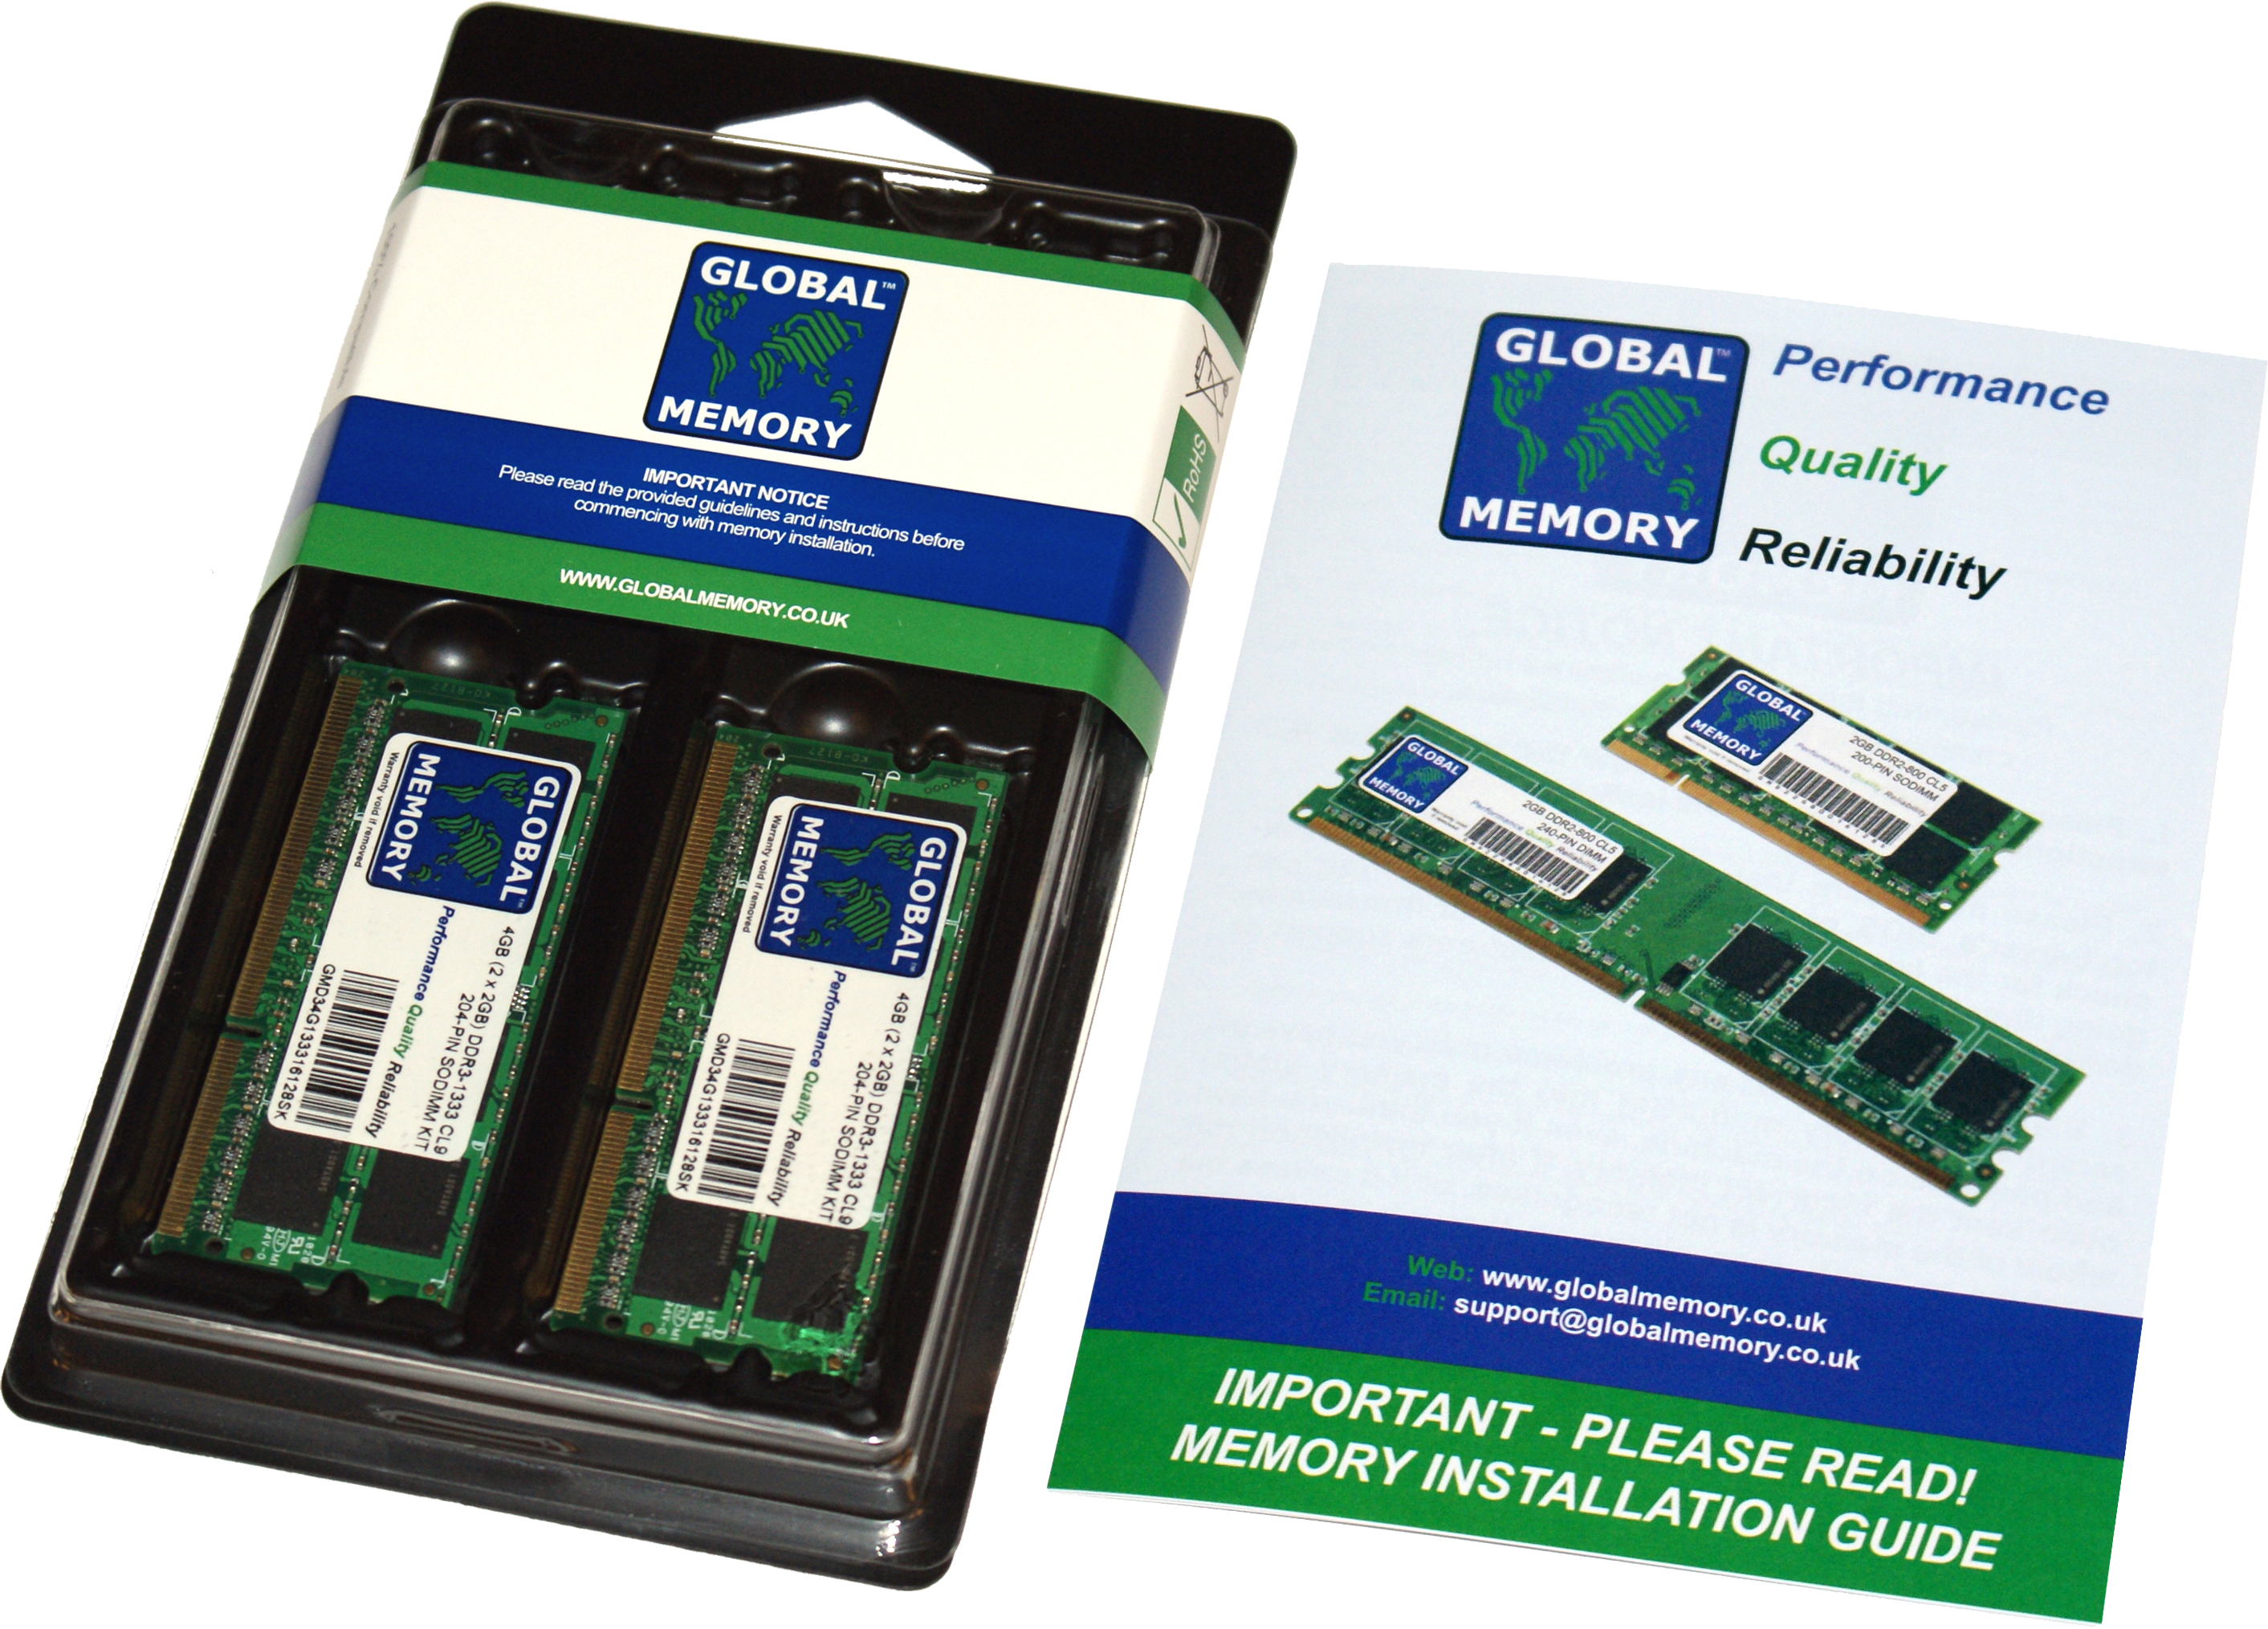 8GB (2 x 4GB) DDR3 1866MHz PC3-14900 204-PIN SODIMM MEMORY RAM KIT FOR LAPTOPS/NOTEBOOKS